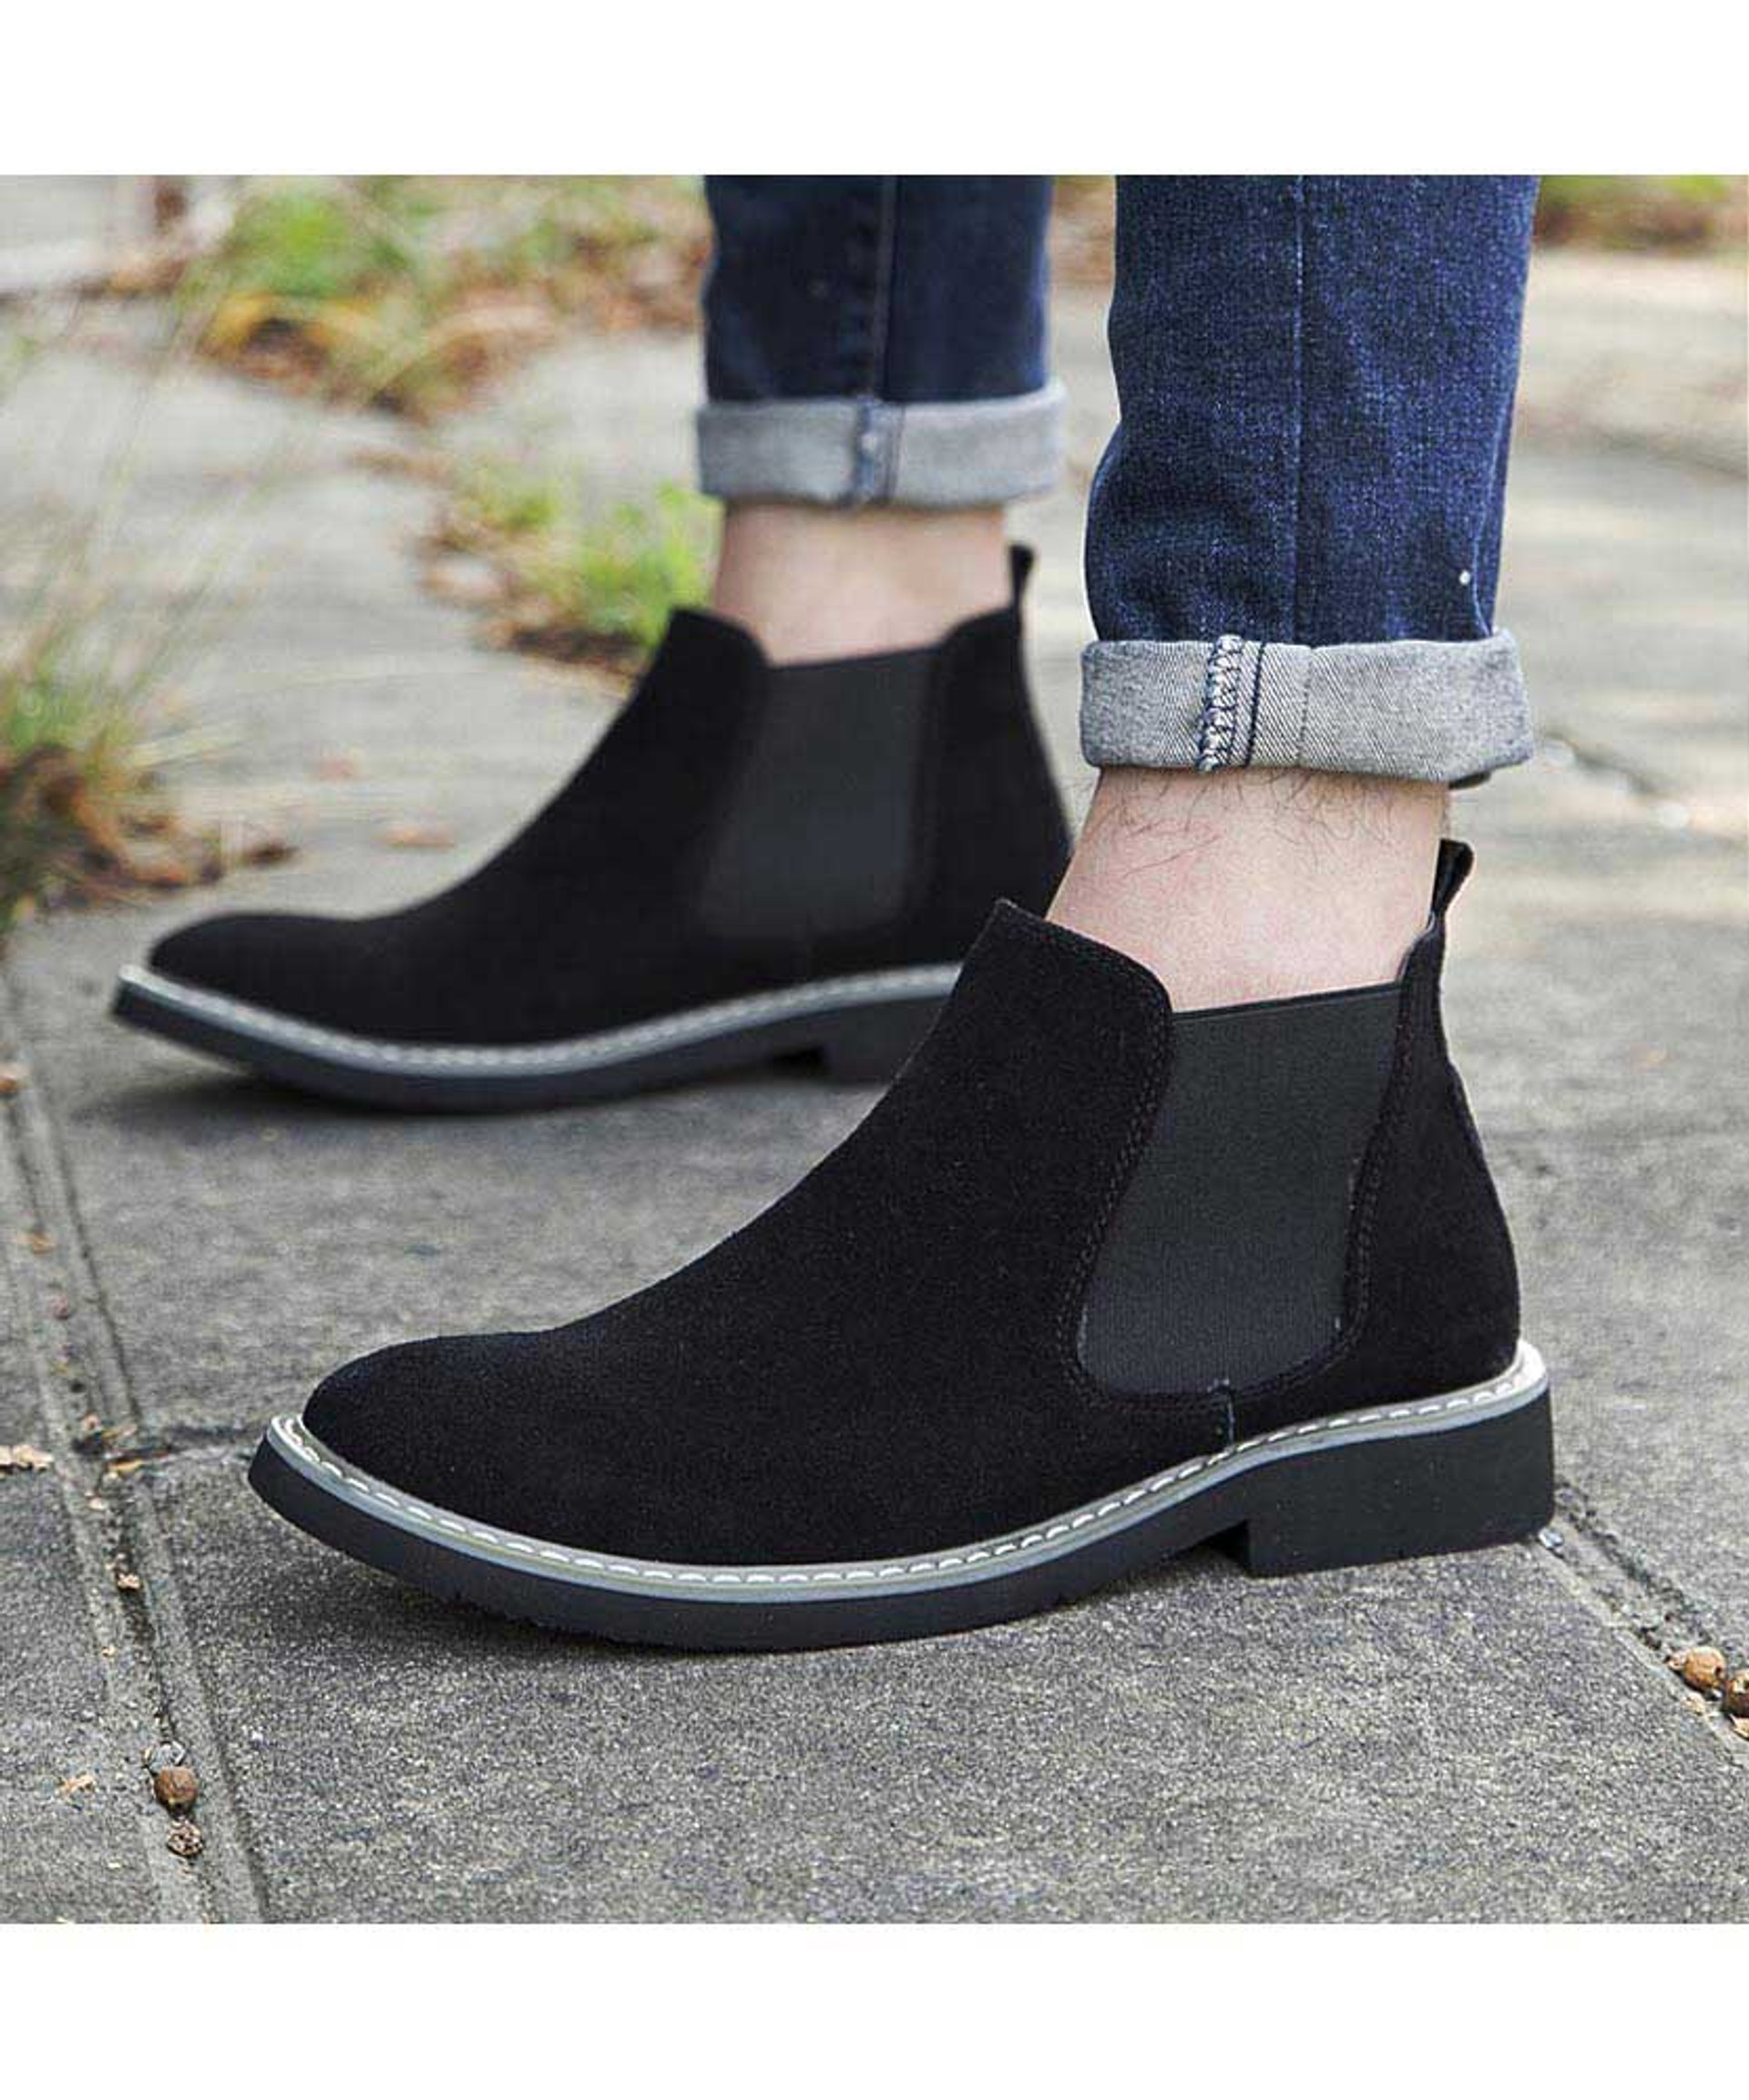 Black slip on dress shoe boot in plain | Mens shoe boots online 1527MS